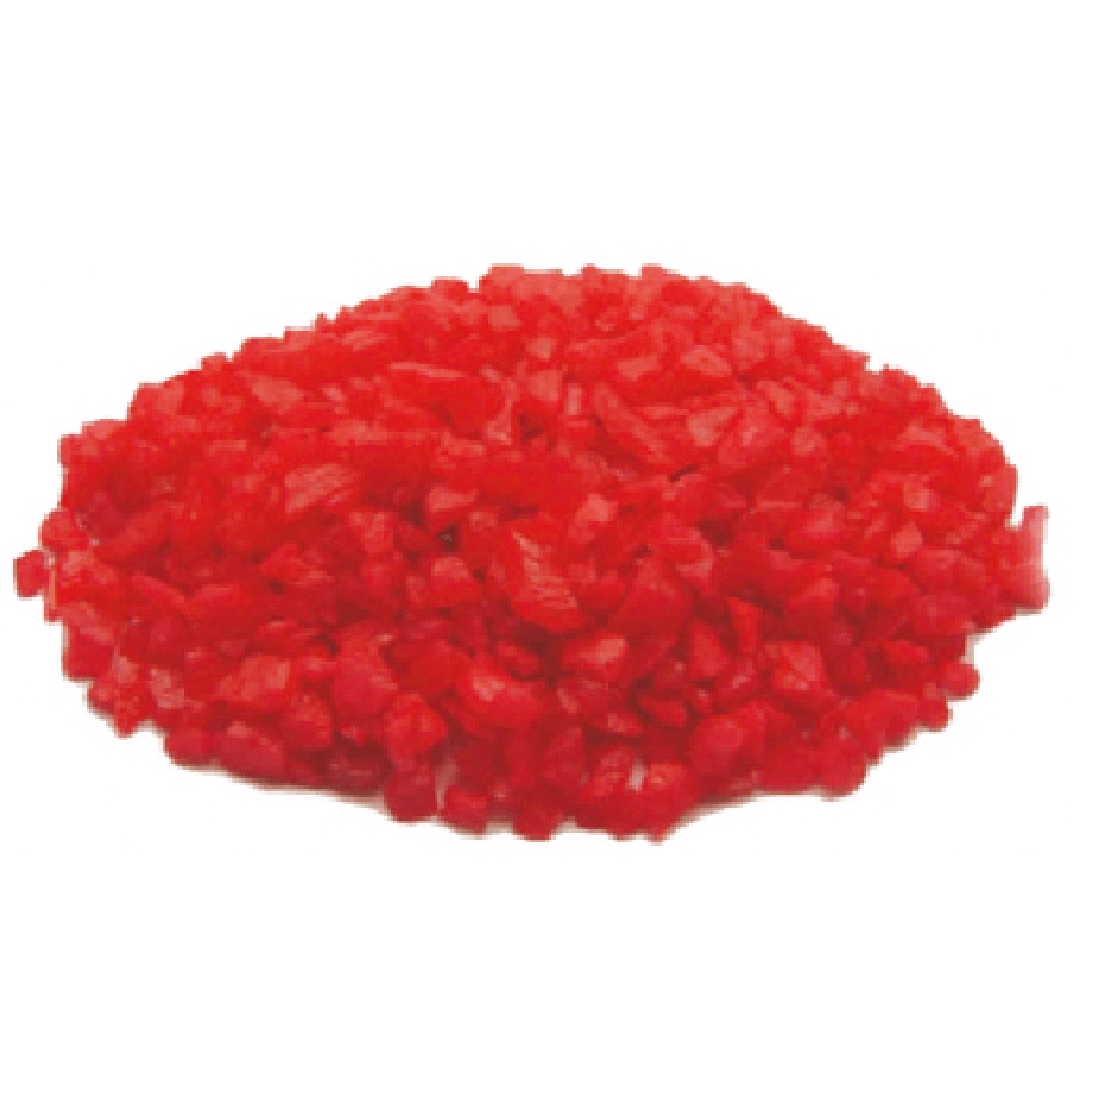 Nisip pentru acvariu Enjoy Red 2-3mm 2kg CHR-004